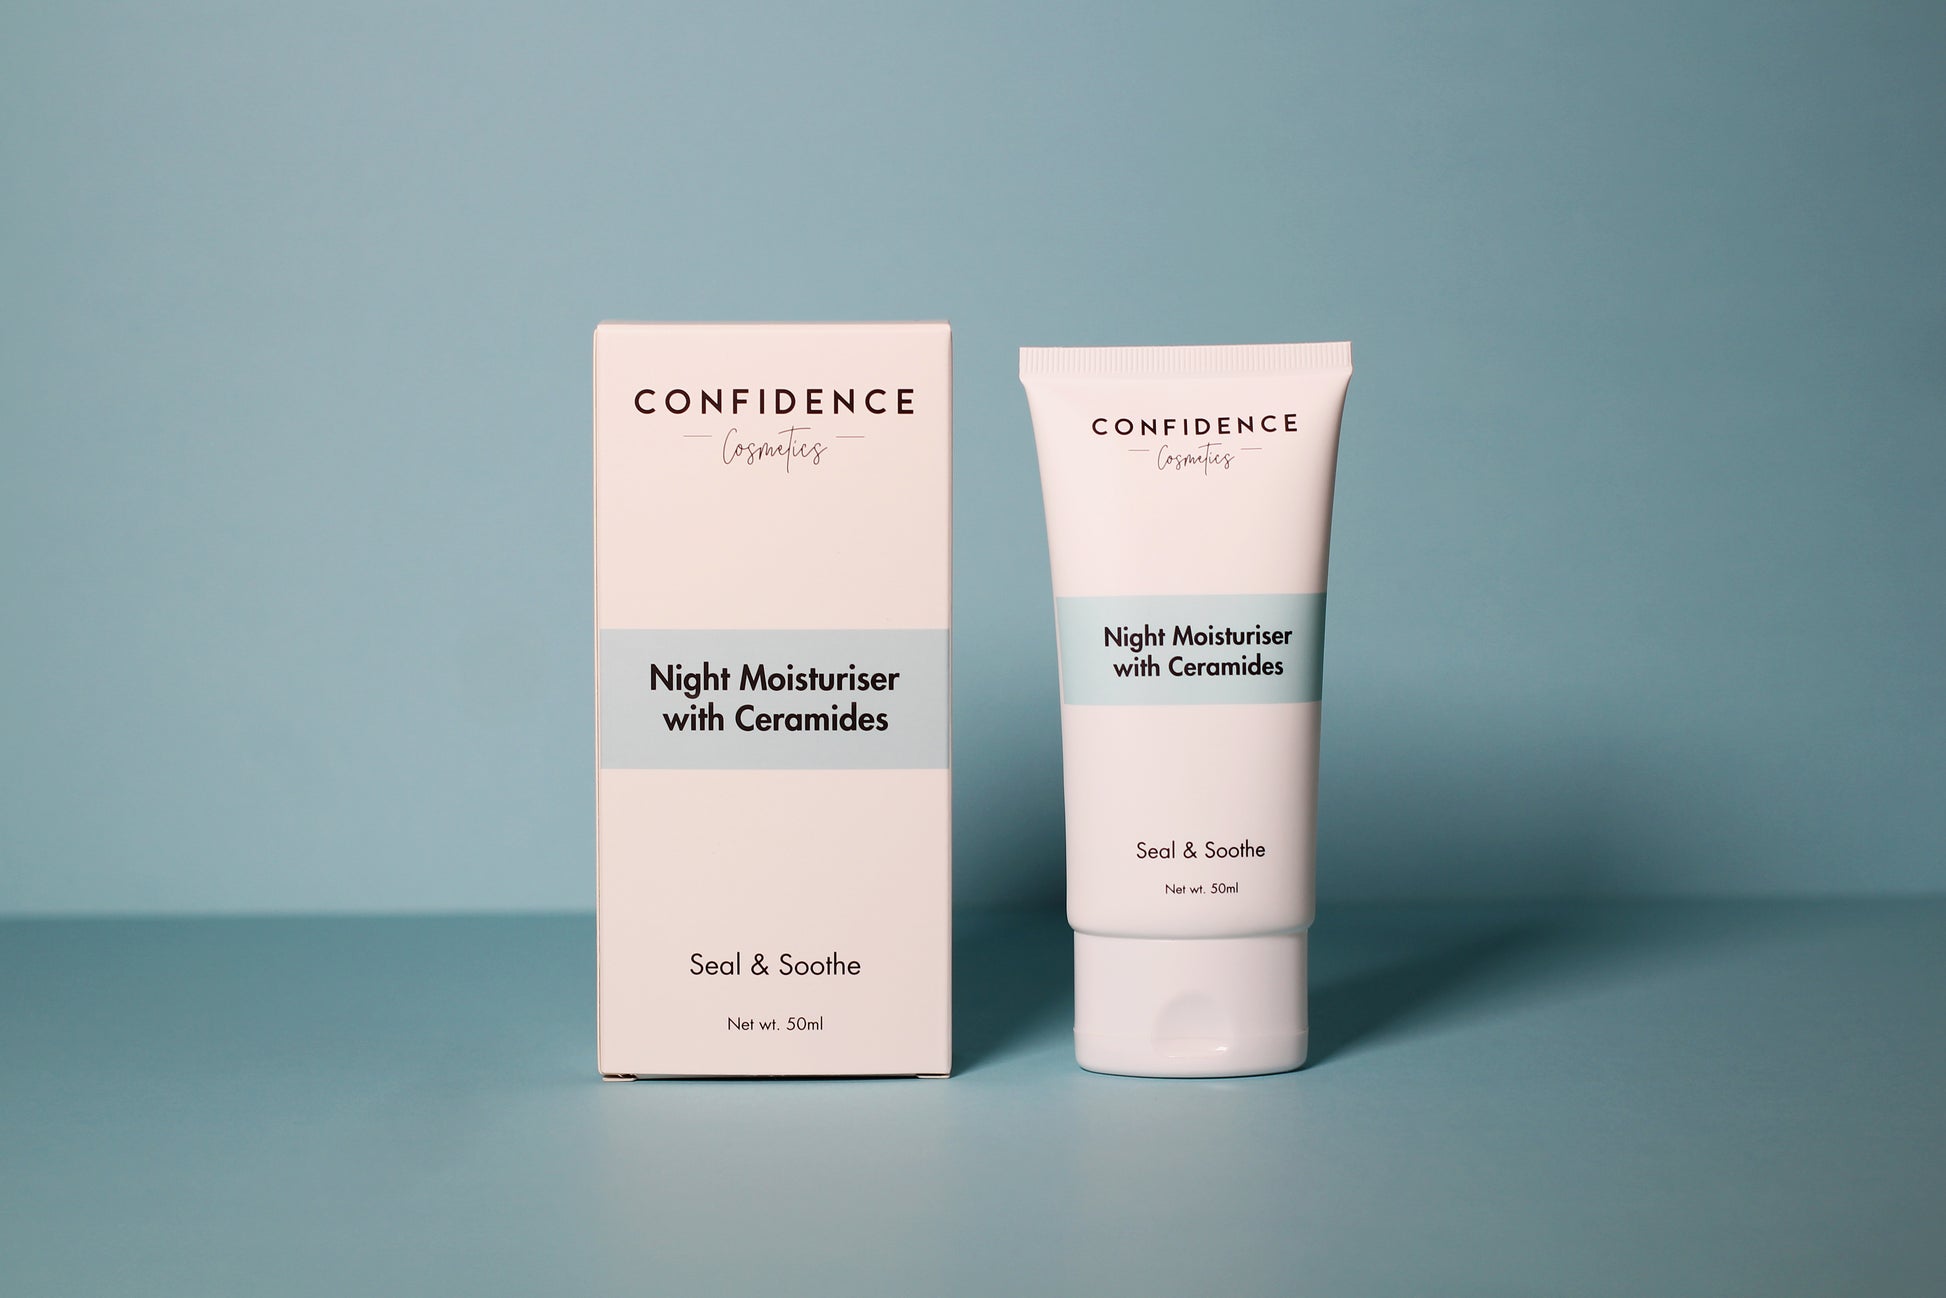 Night Moisturiser with Ceramides Confidence Cosmetics